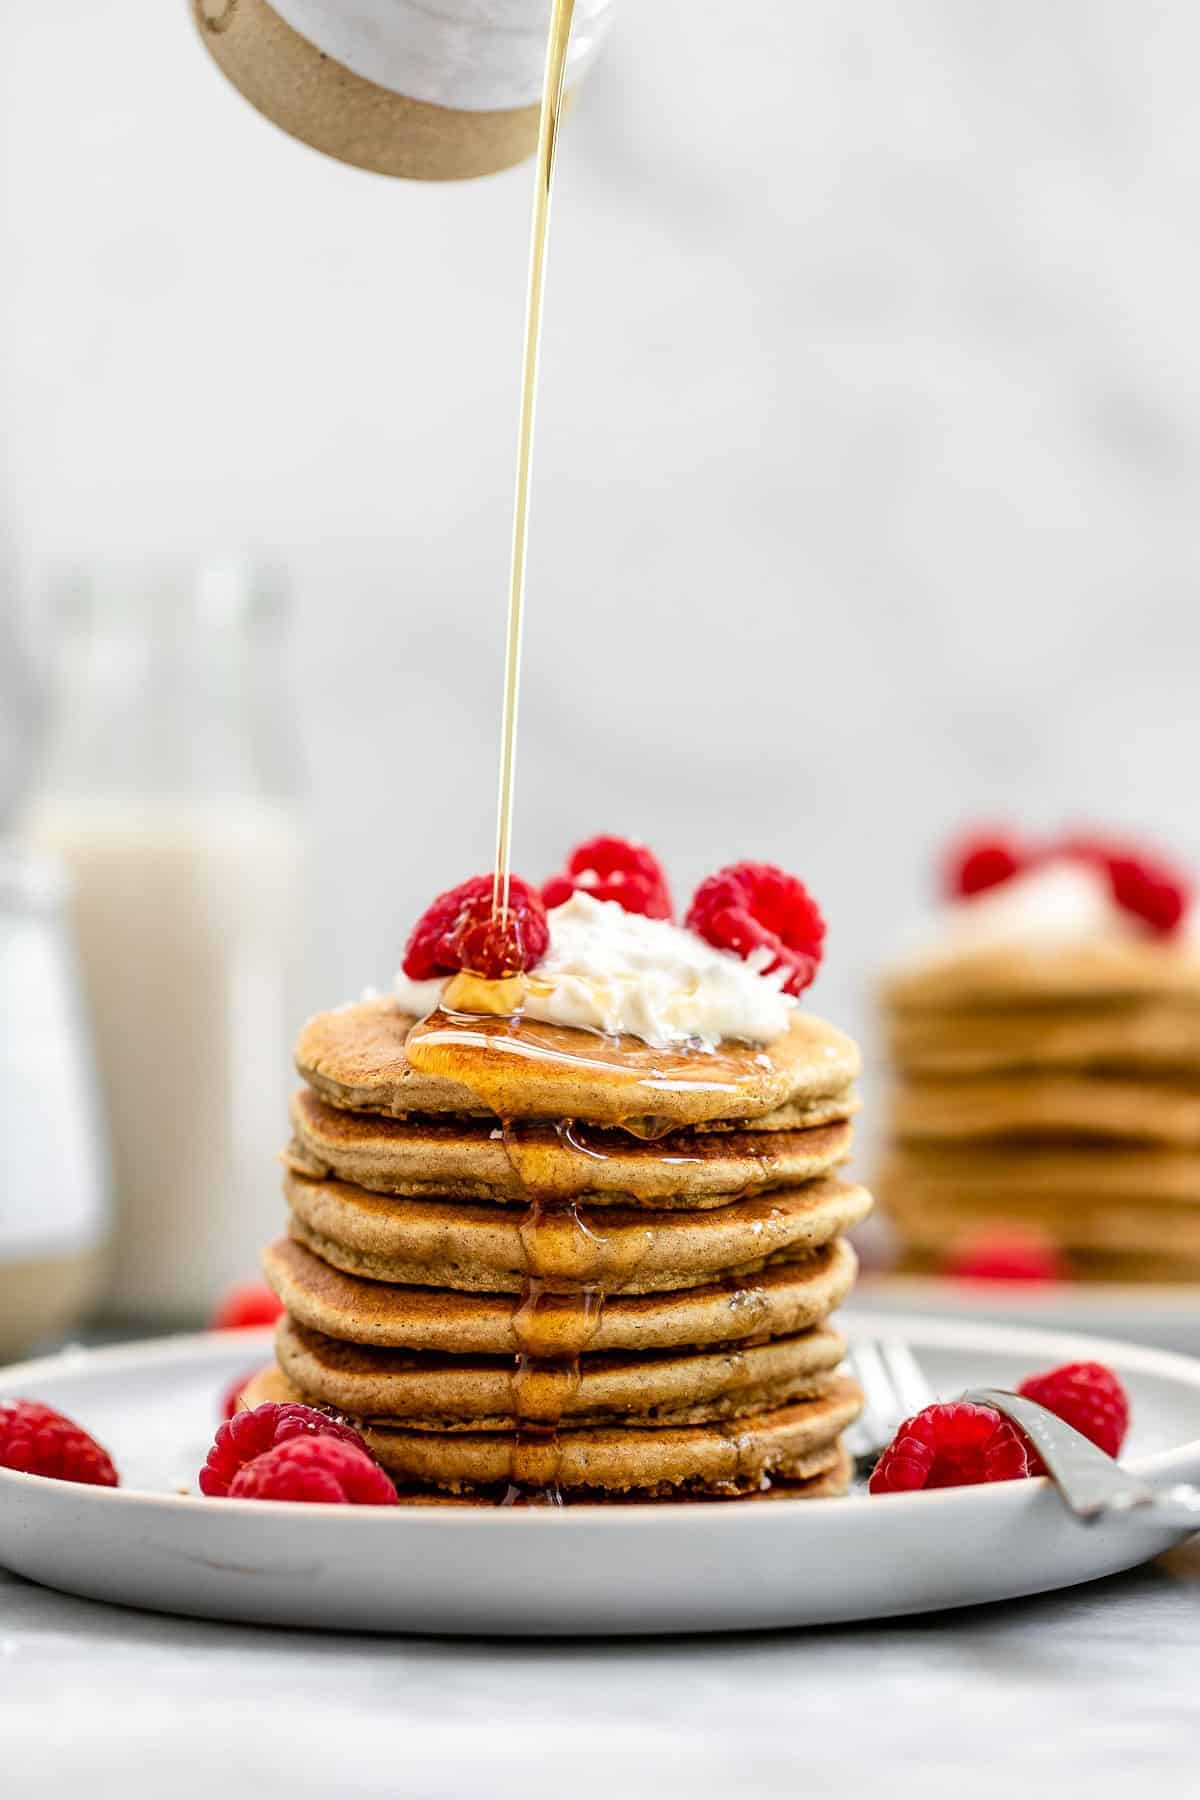 two stacks of vegan pancakes with raspberries on top